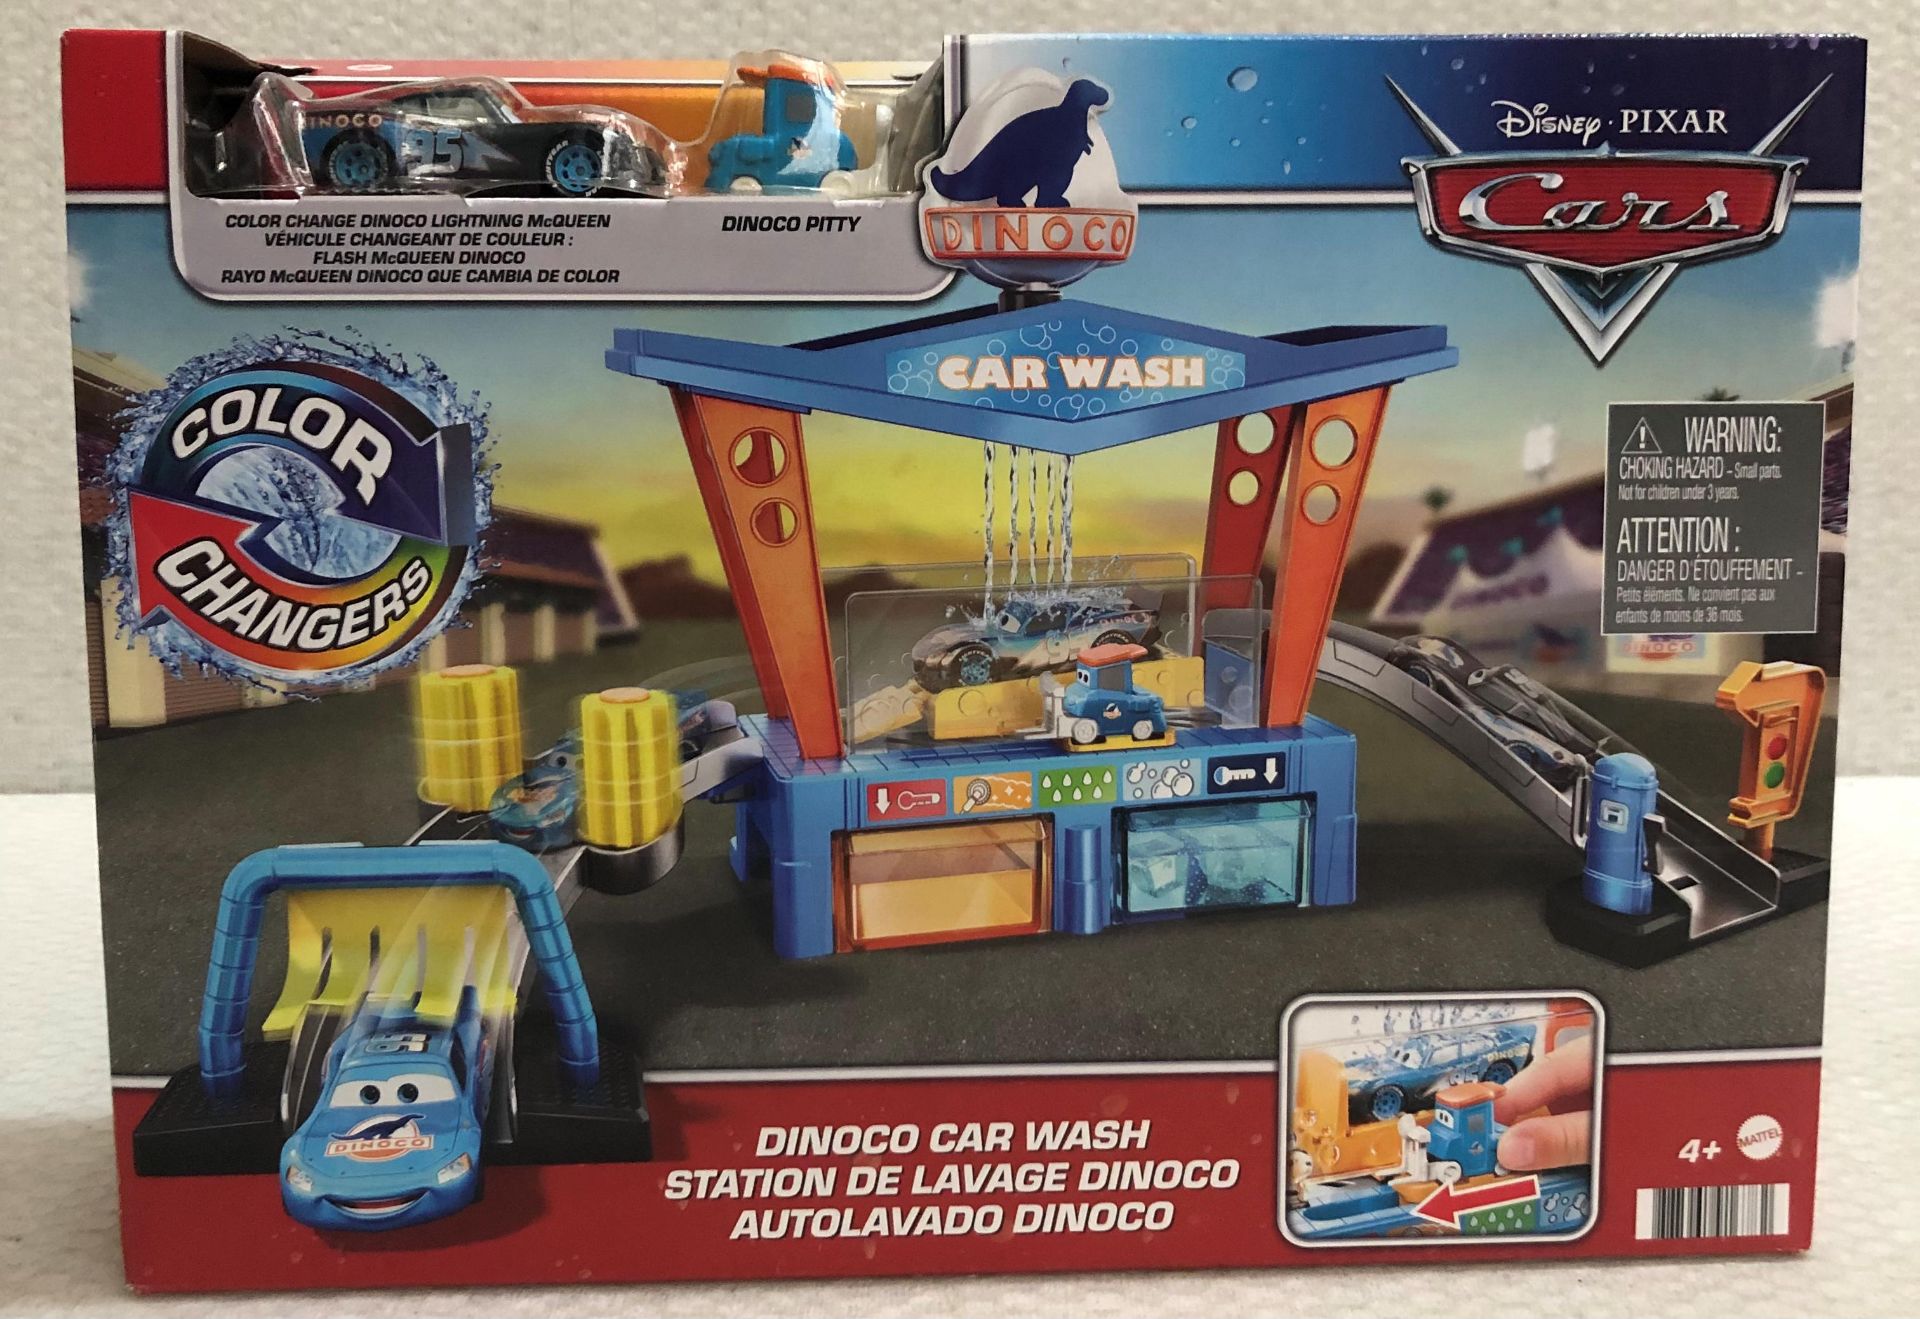 1 x Disney/Pixar Cars Dinoco Car Wash Playset - New/Boxed - HTYS305 - CL987 - Location: Altrincham - Image 3 of 5